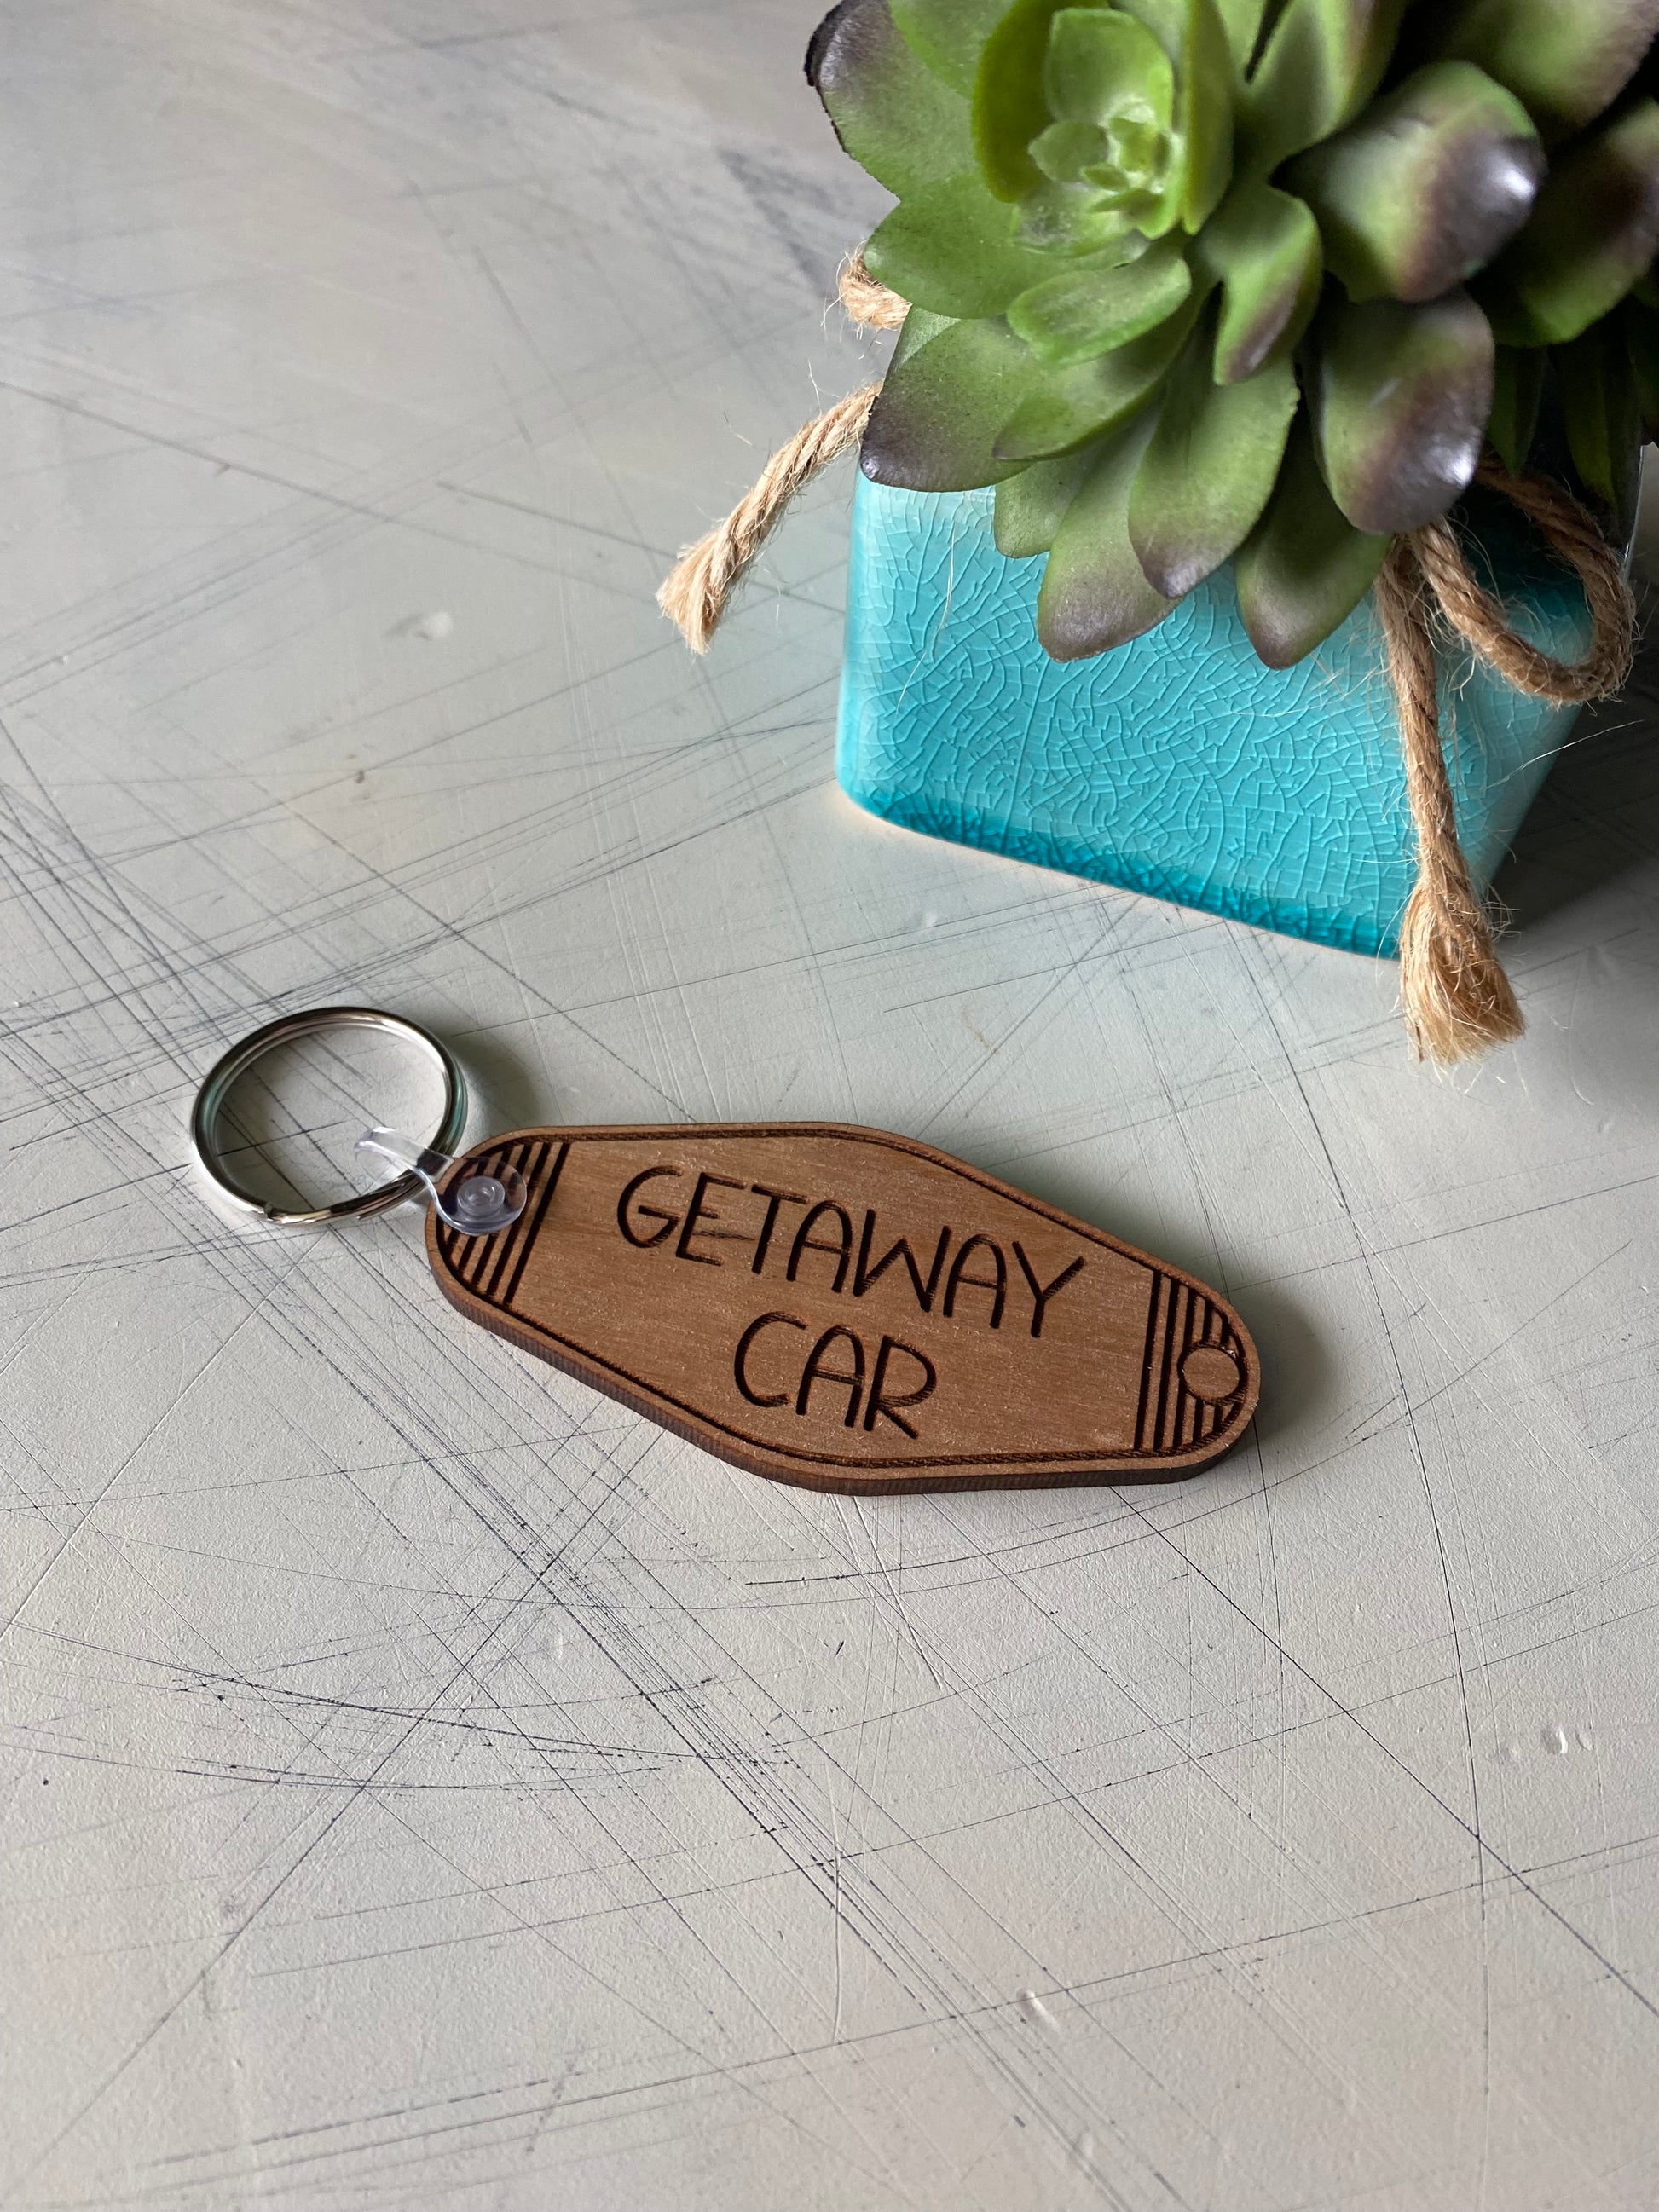 Getaway Car - wood keychain - Novotny Designs - motel style keychain